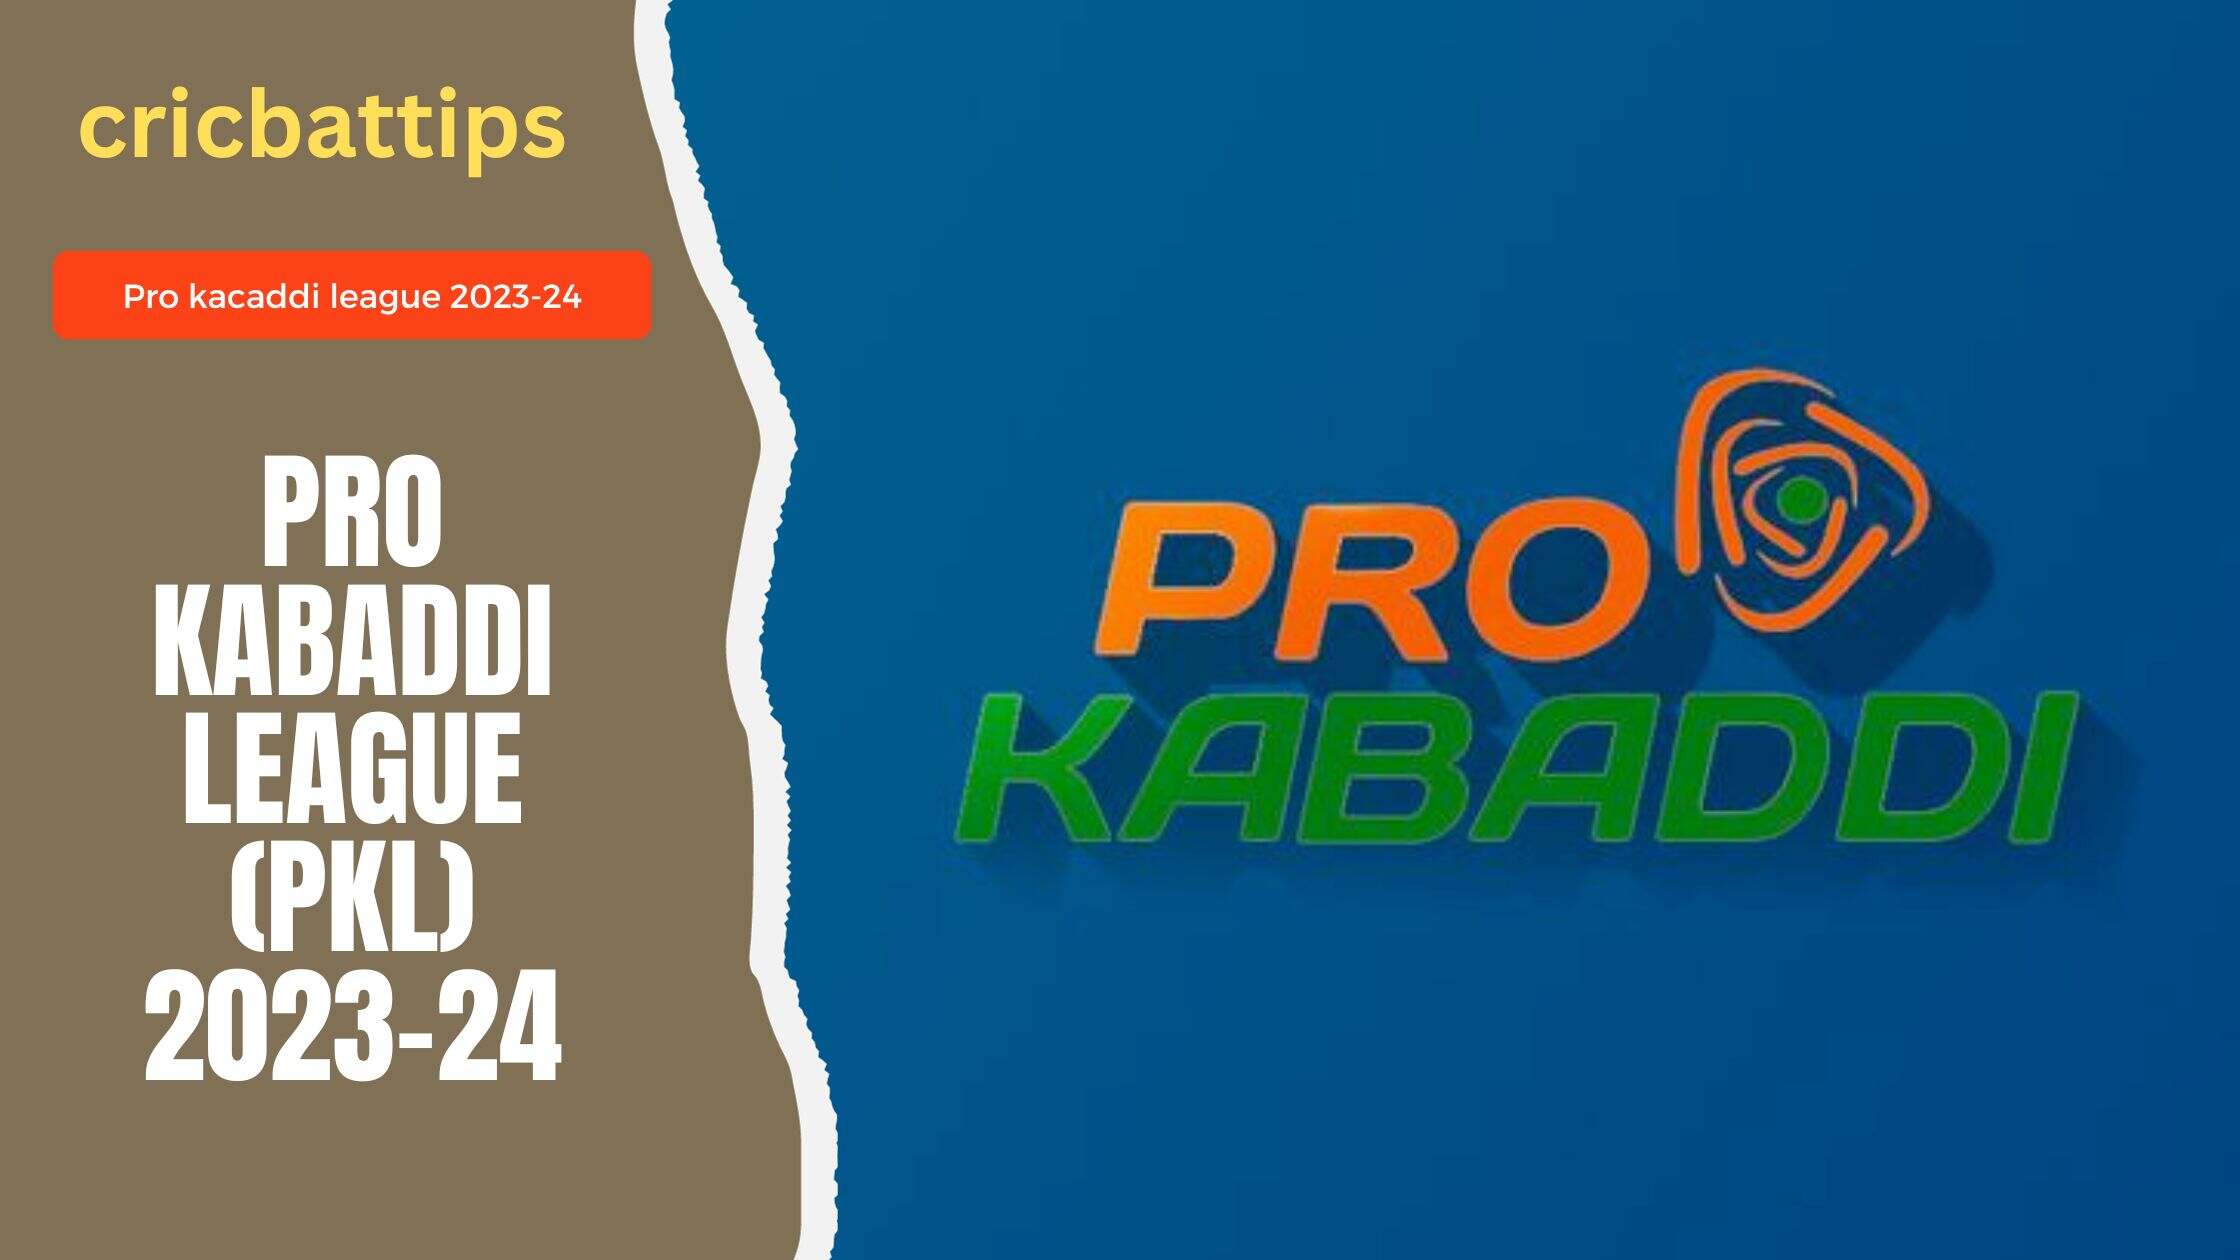 Pro Kabaddi League (PKL) 2023-24